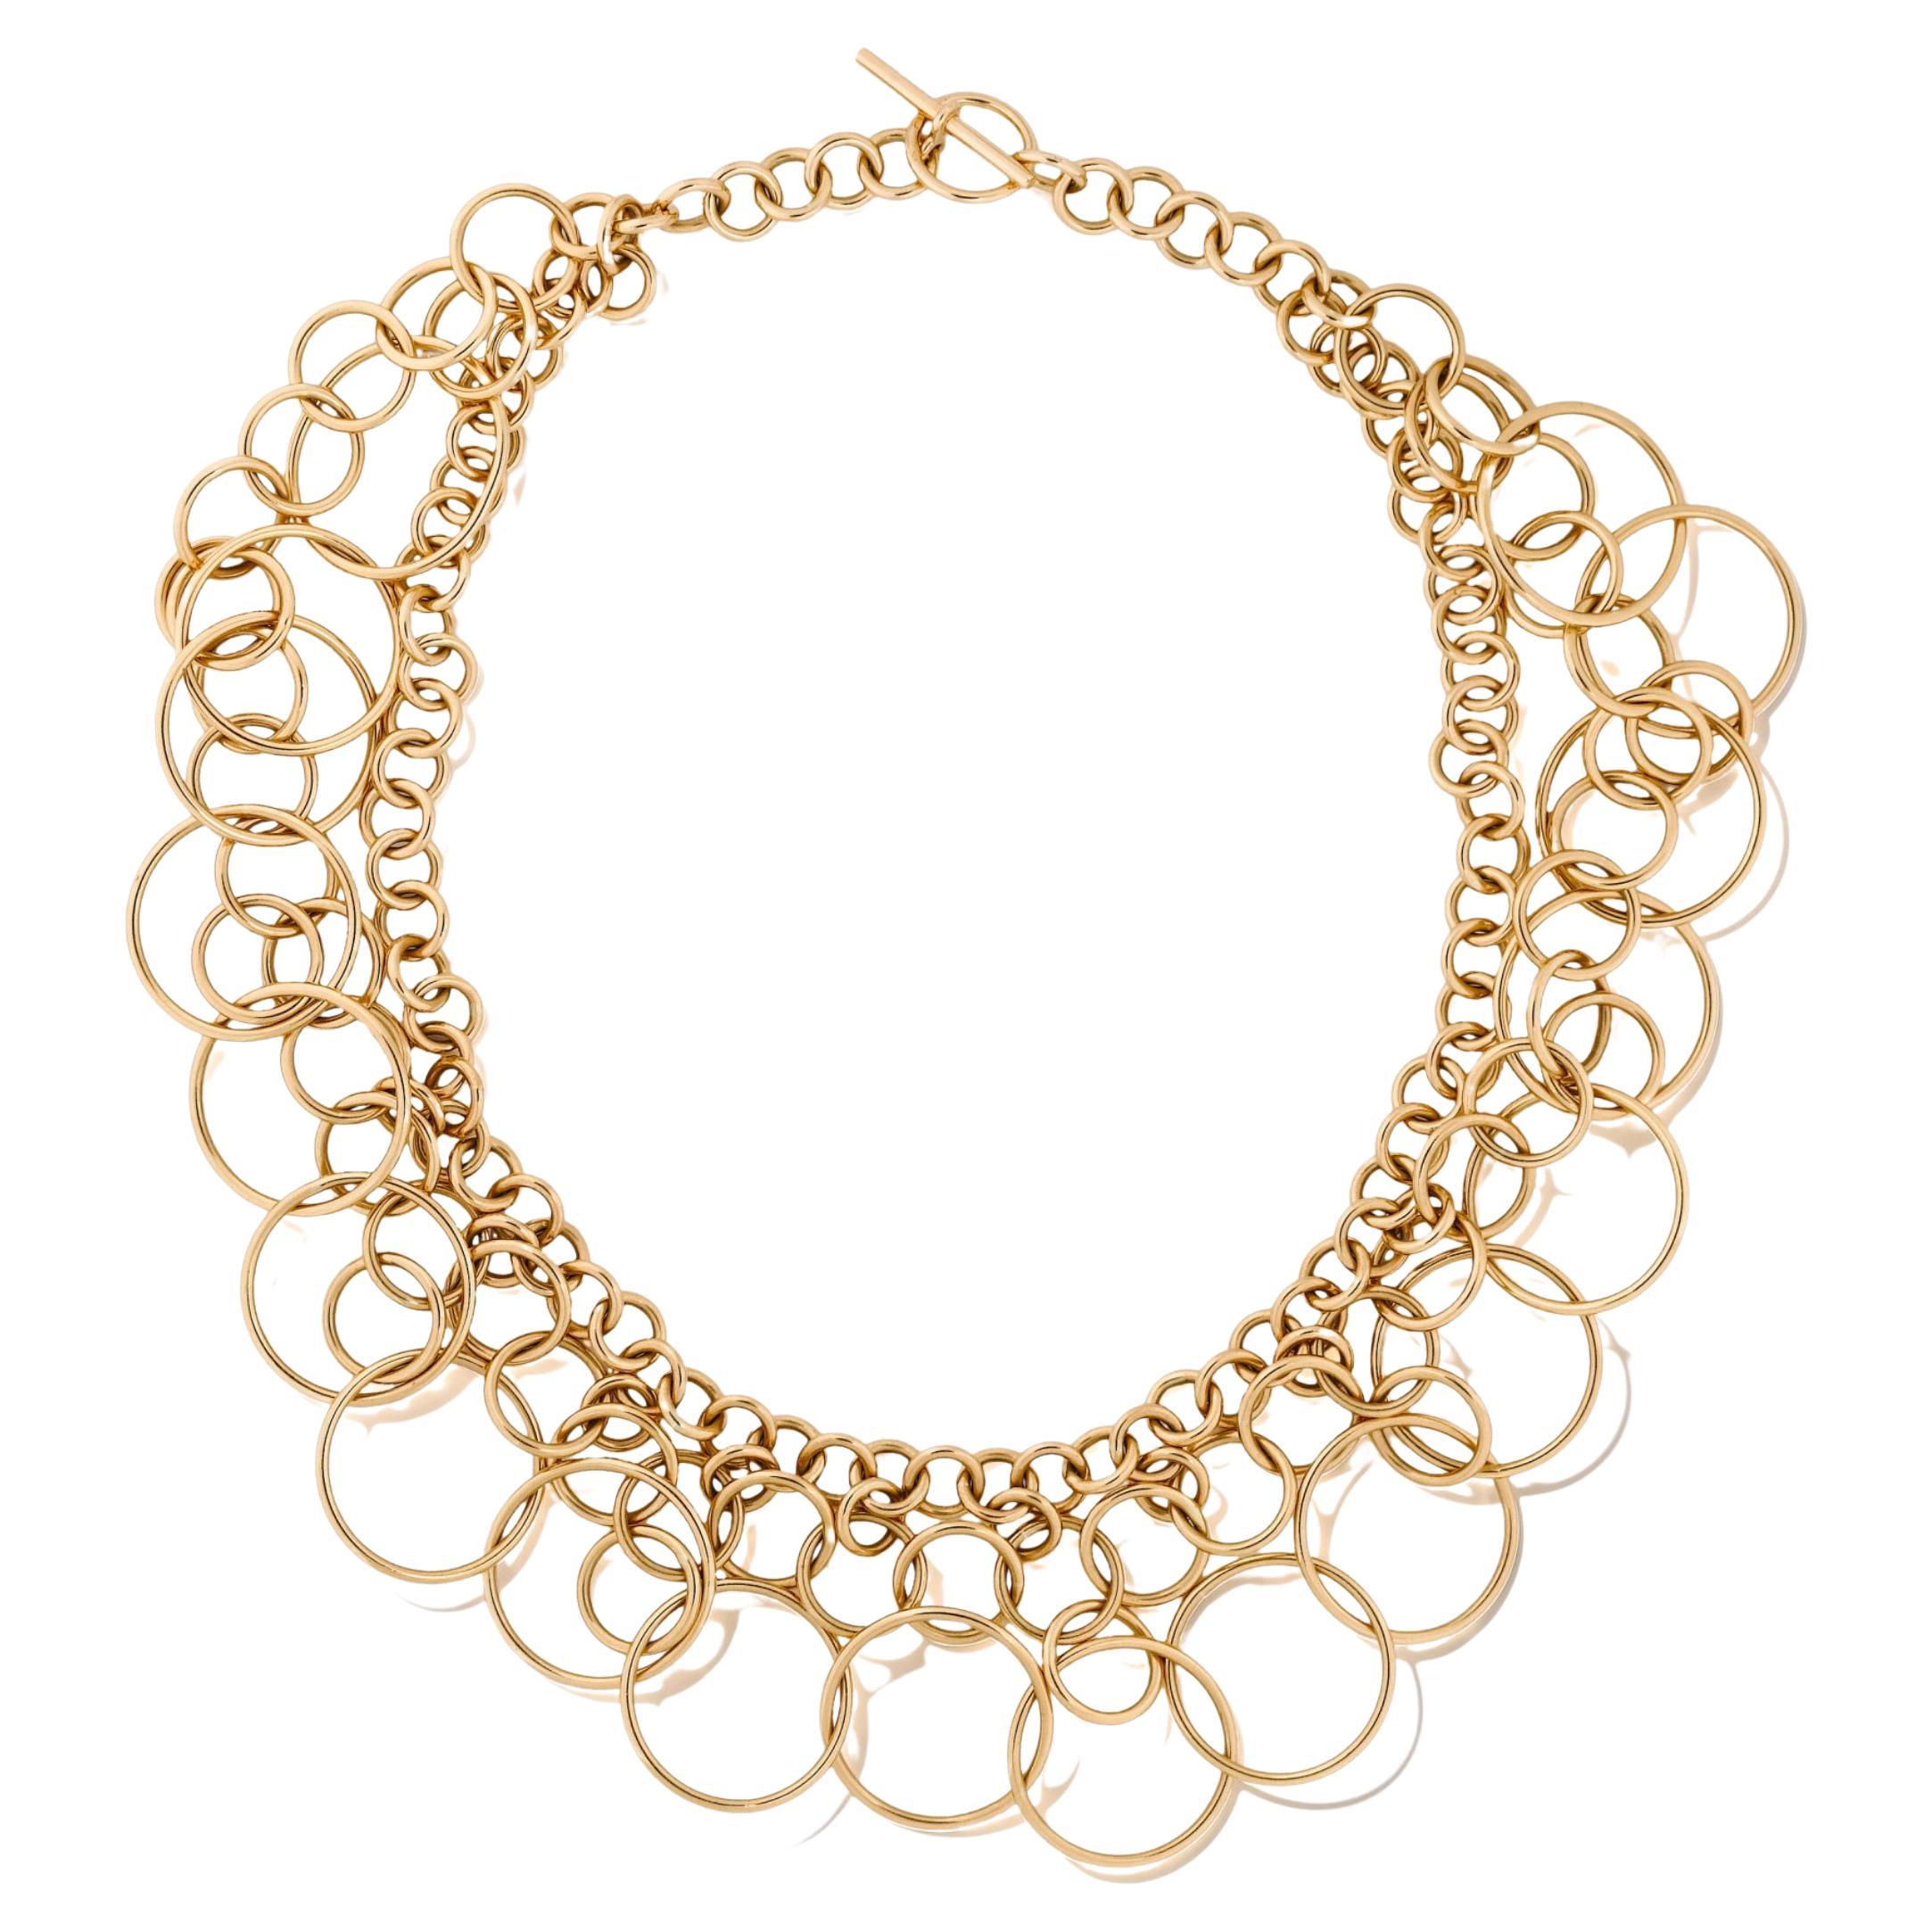 Hermes 18k Gold "Shore" Necklace